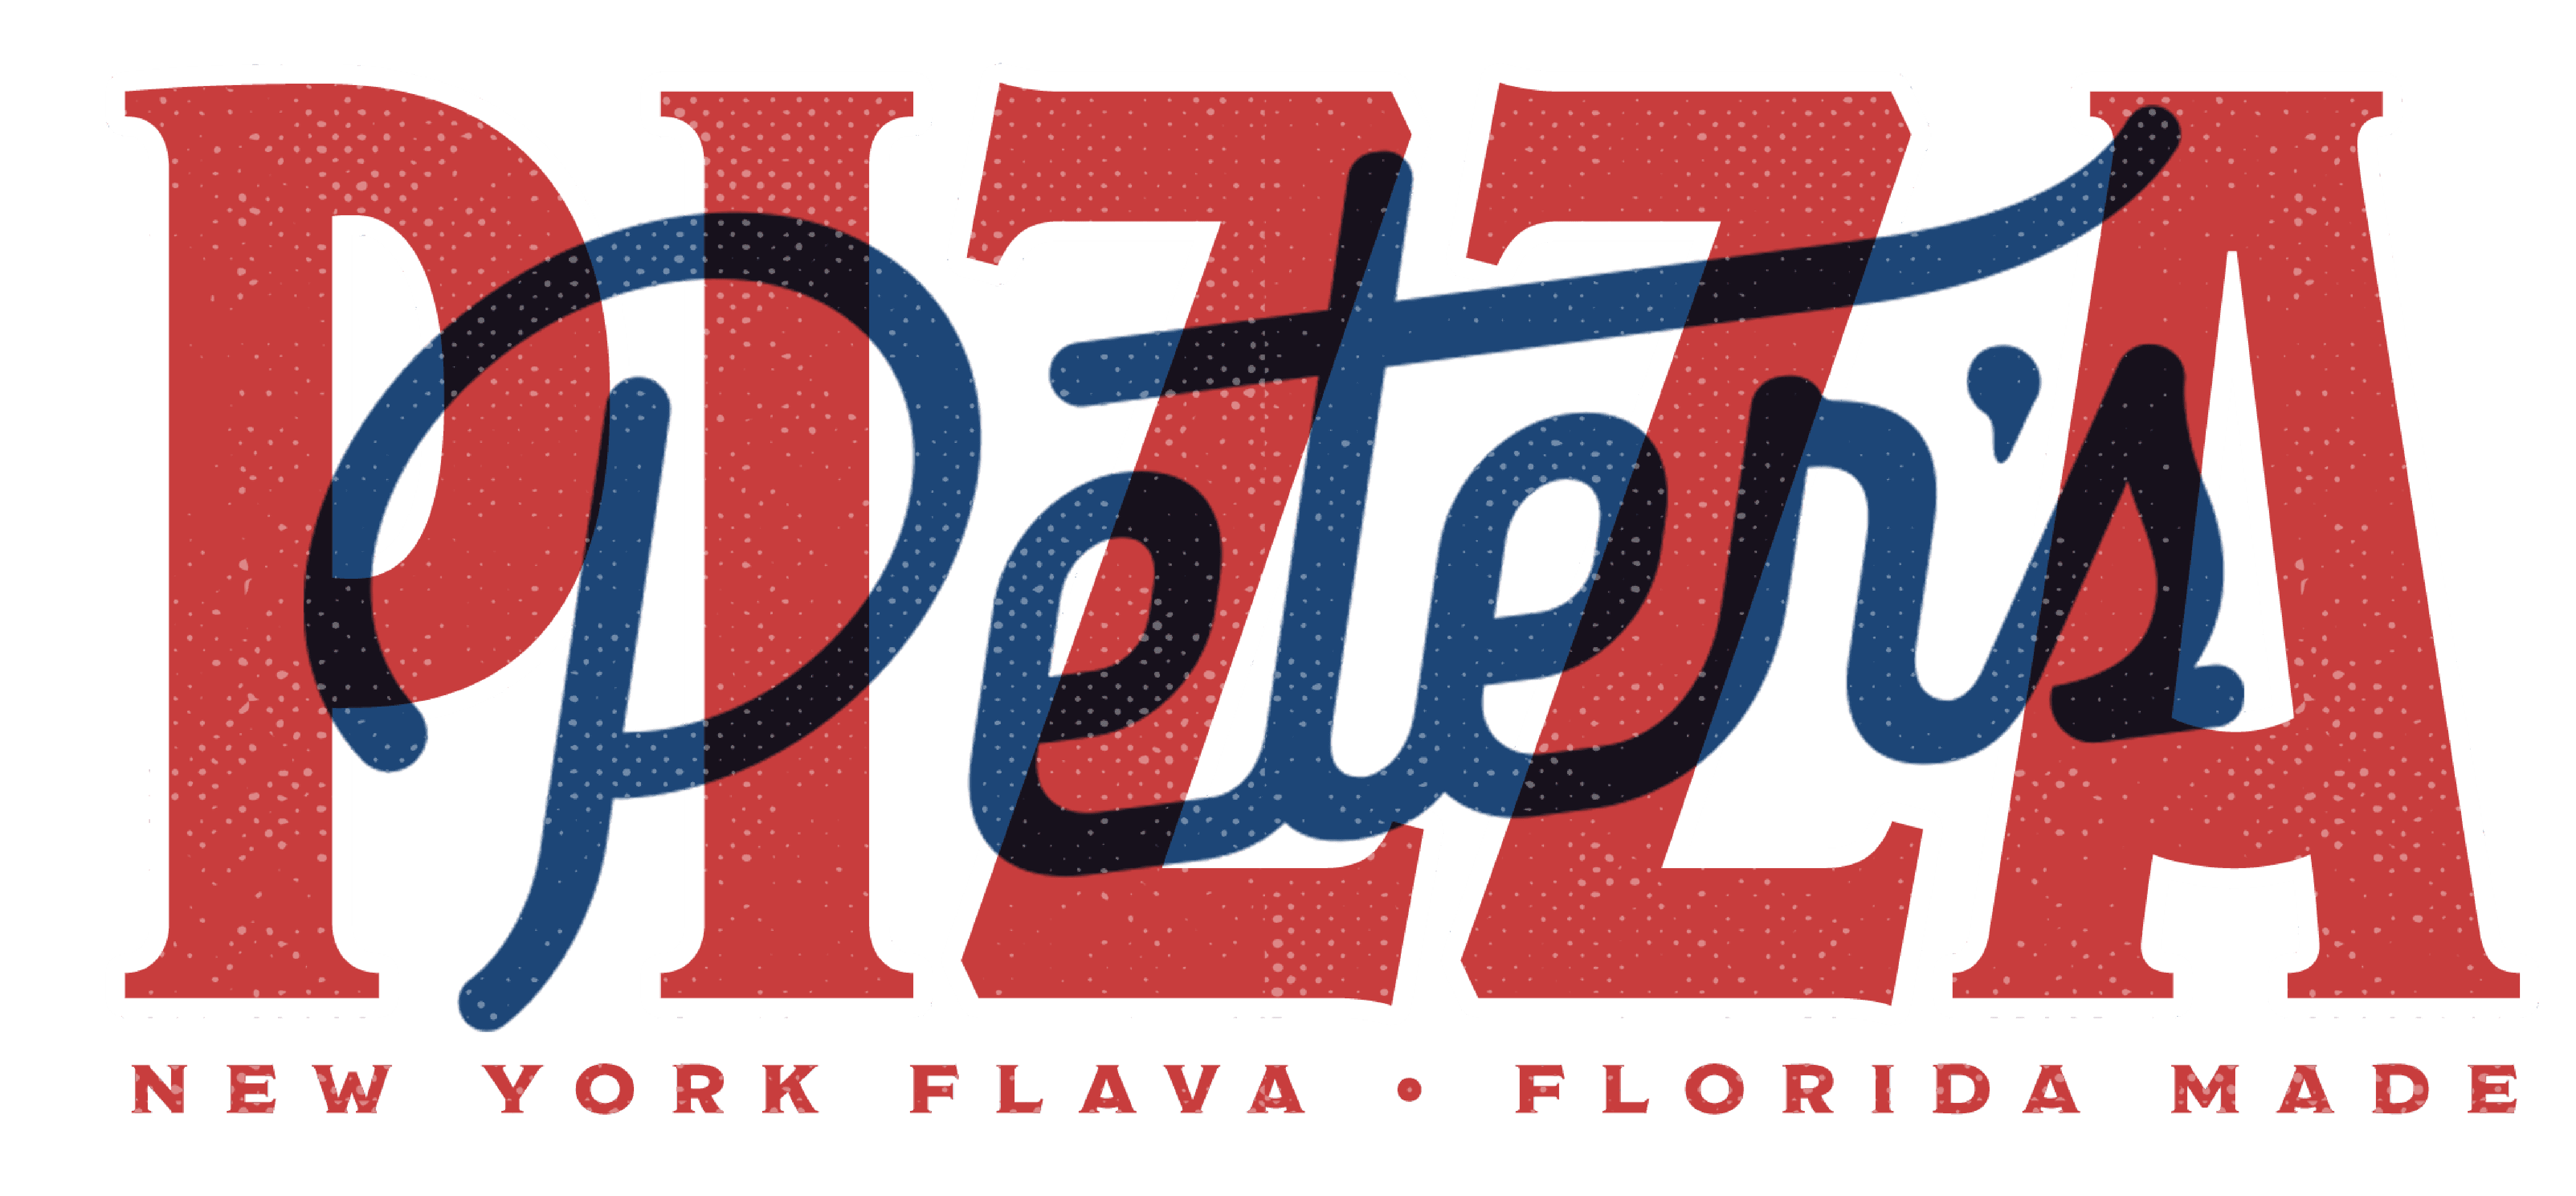 Peter's Pizza, New York Flava - Florida Made